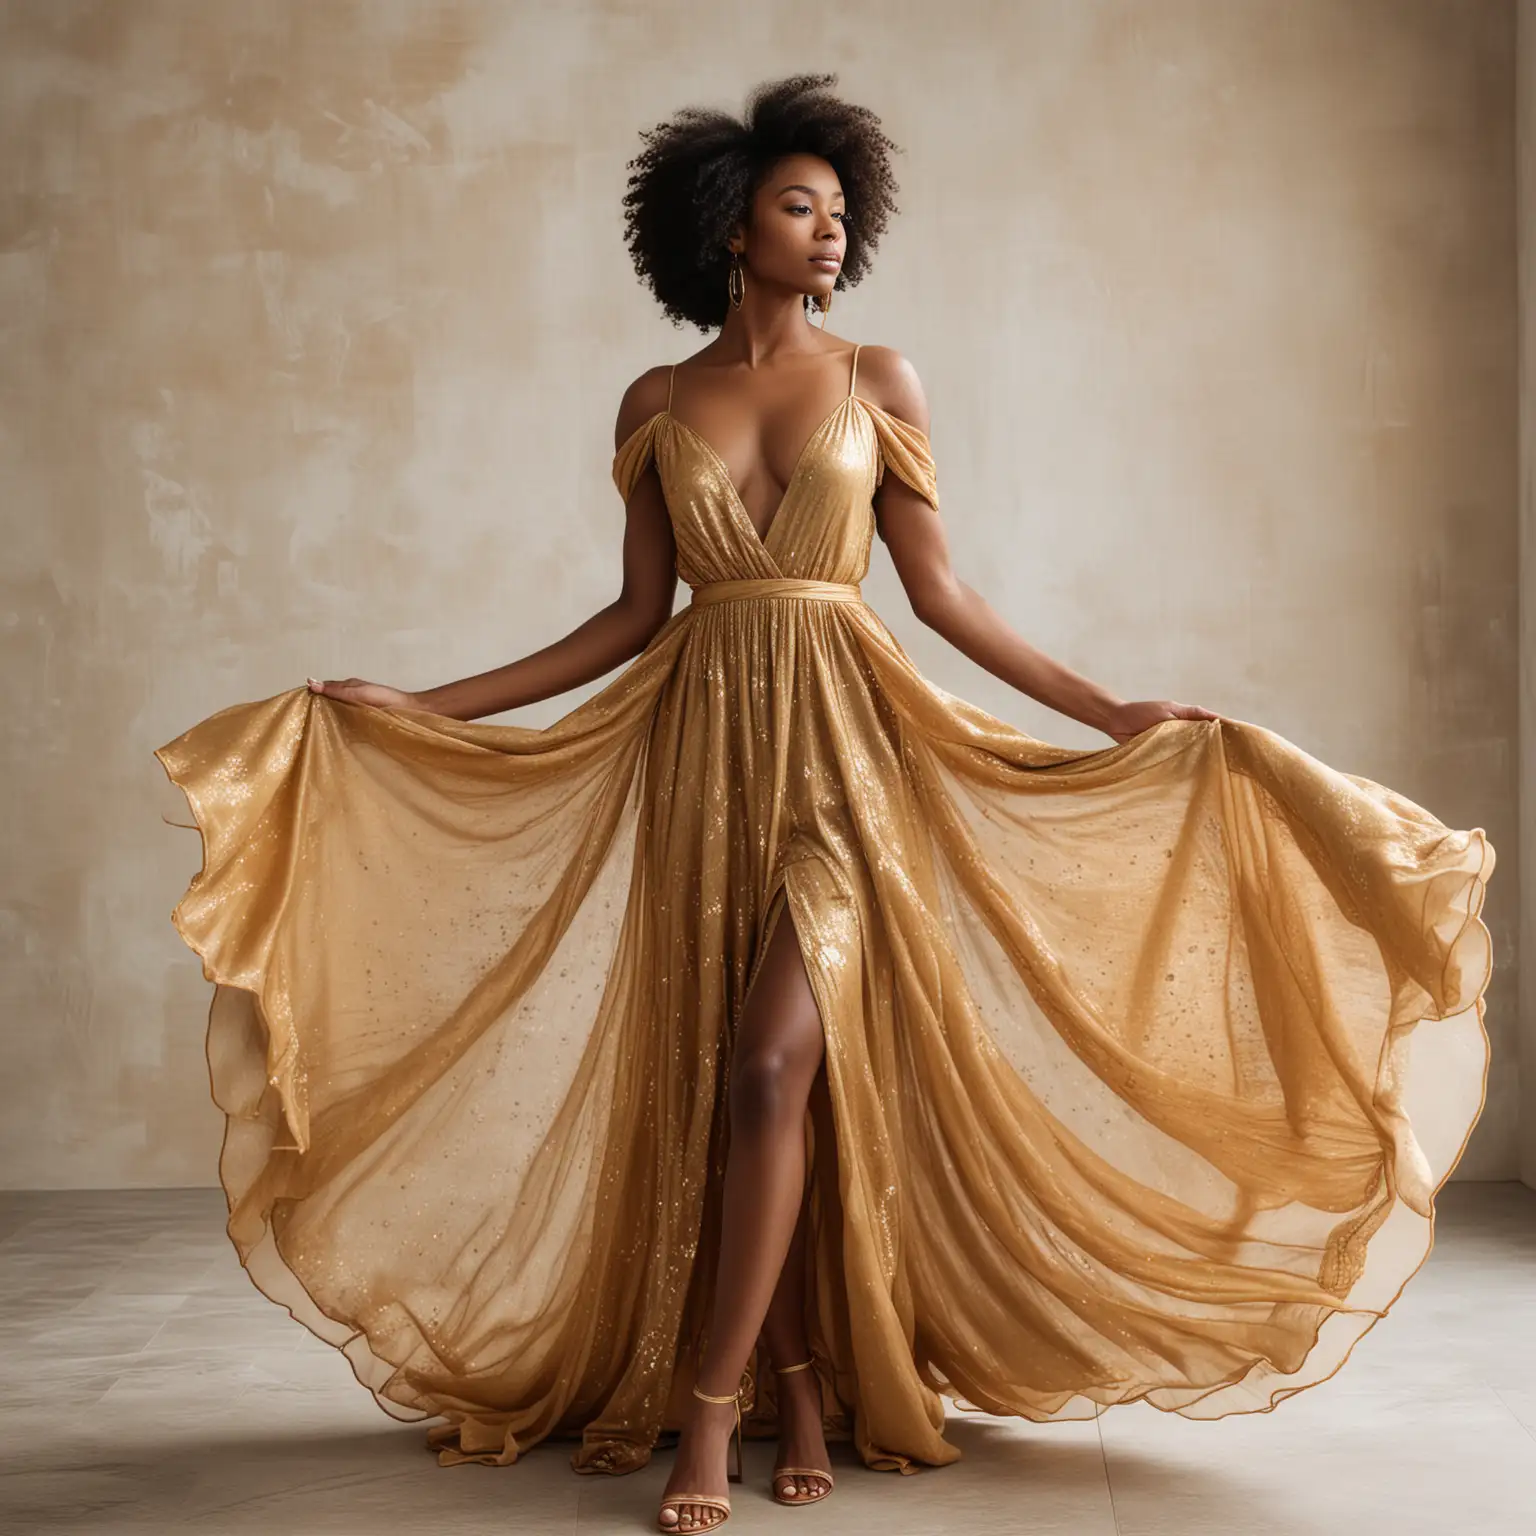 Elegant Black Woman in Shiny Gold Flowy Dress